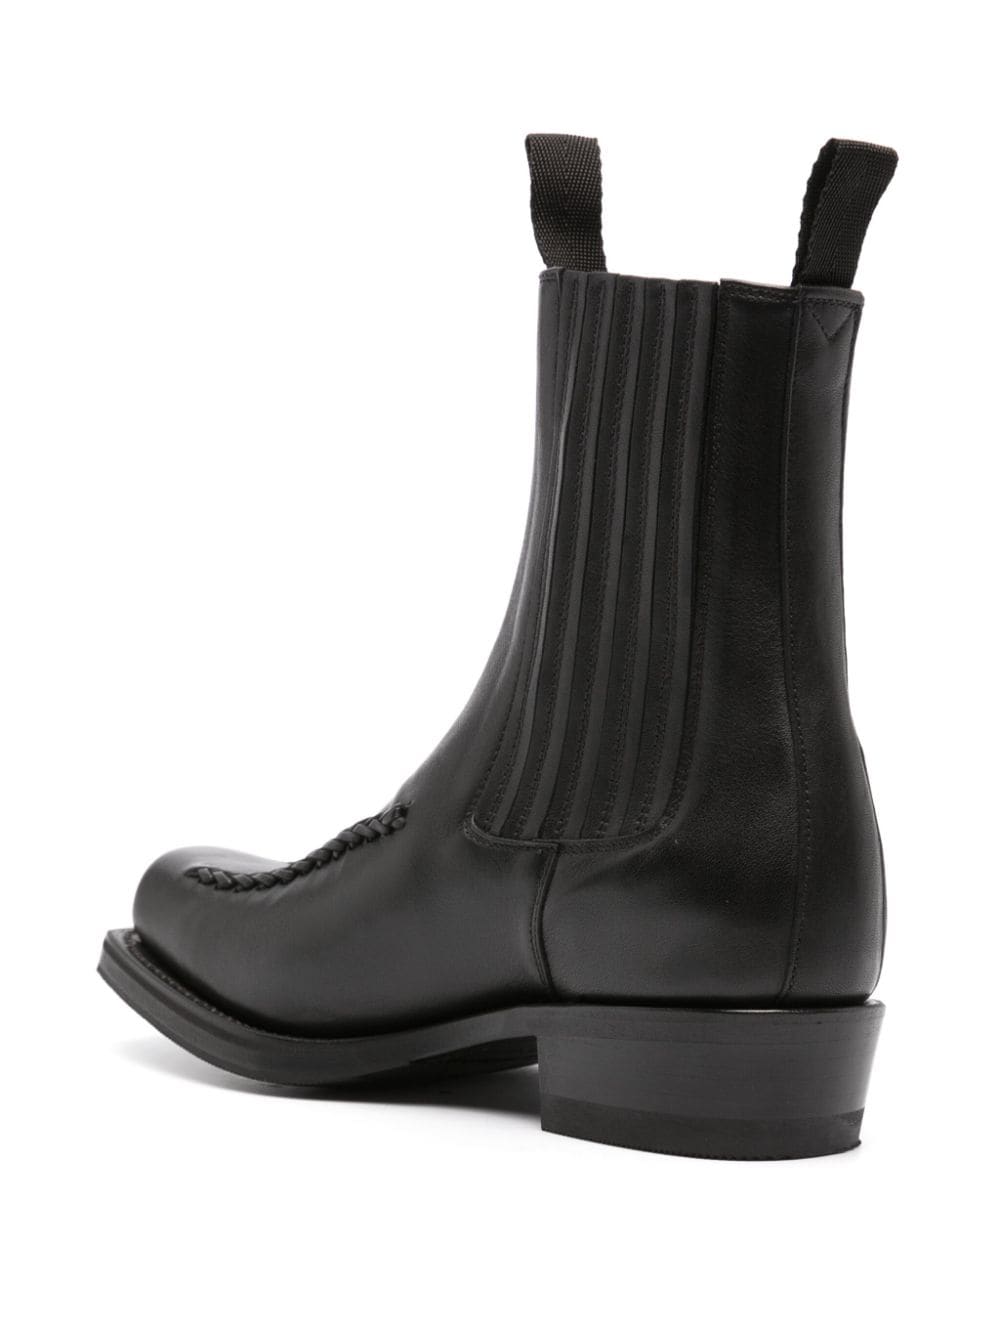 Agulla Boot in Black